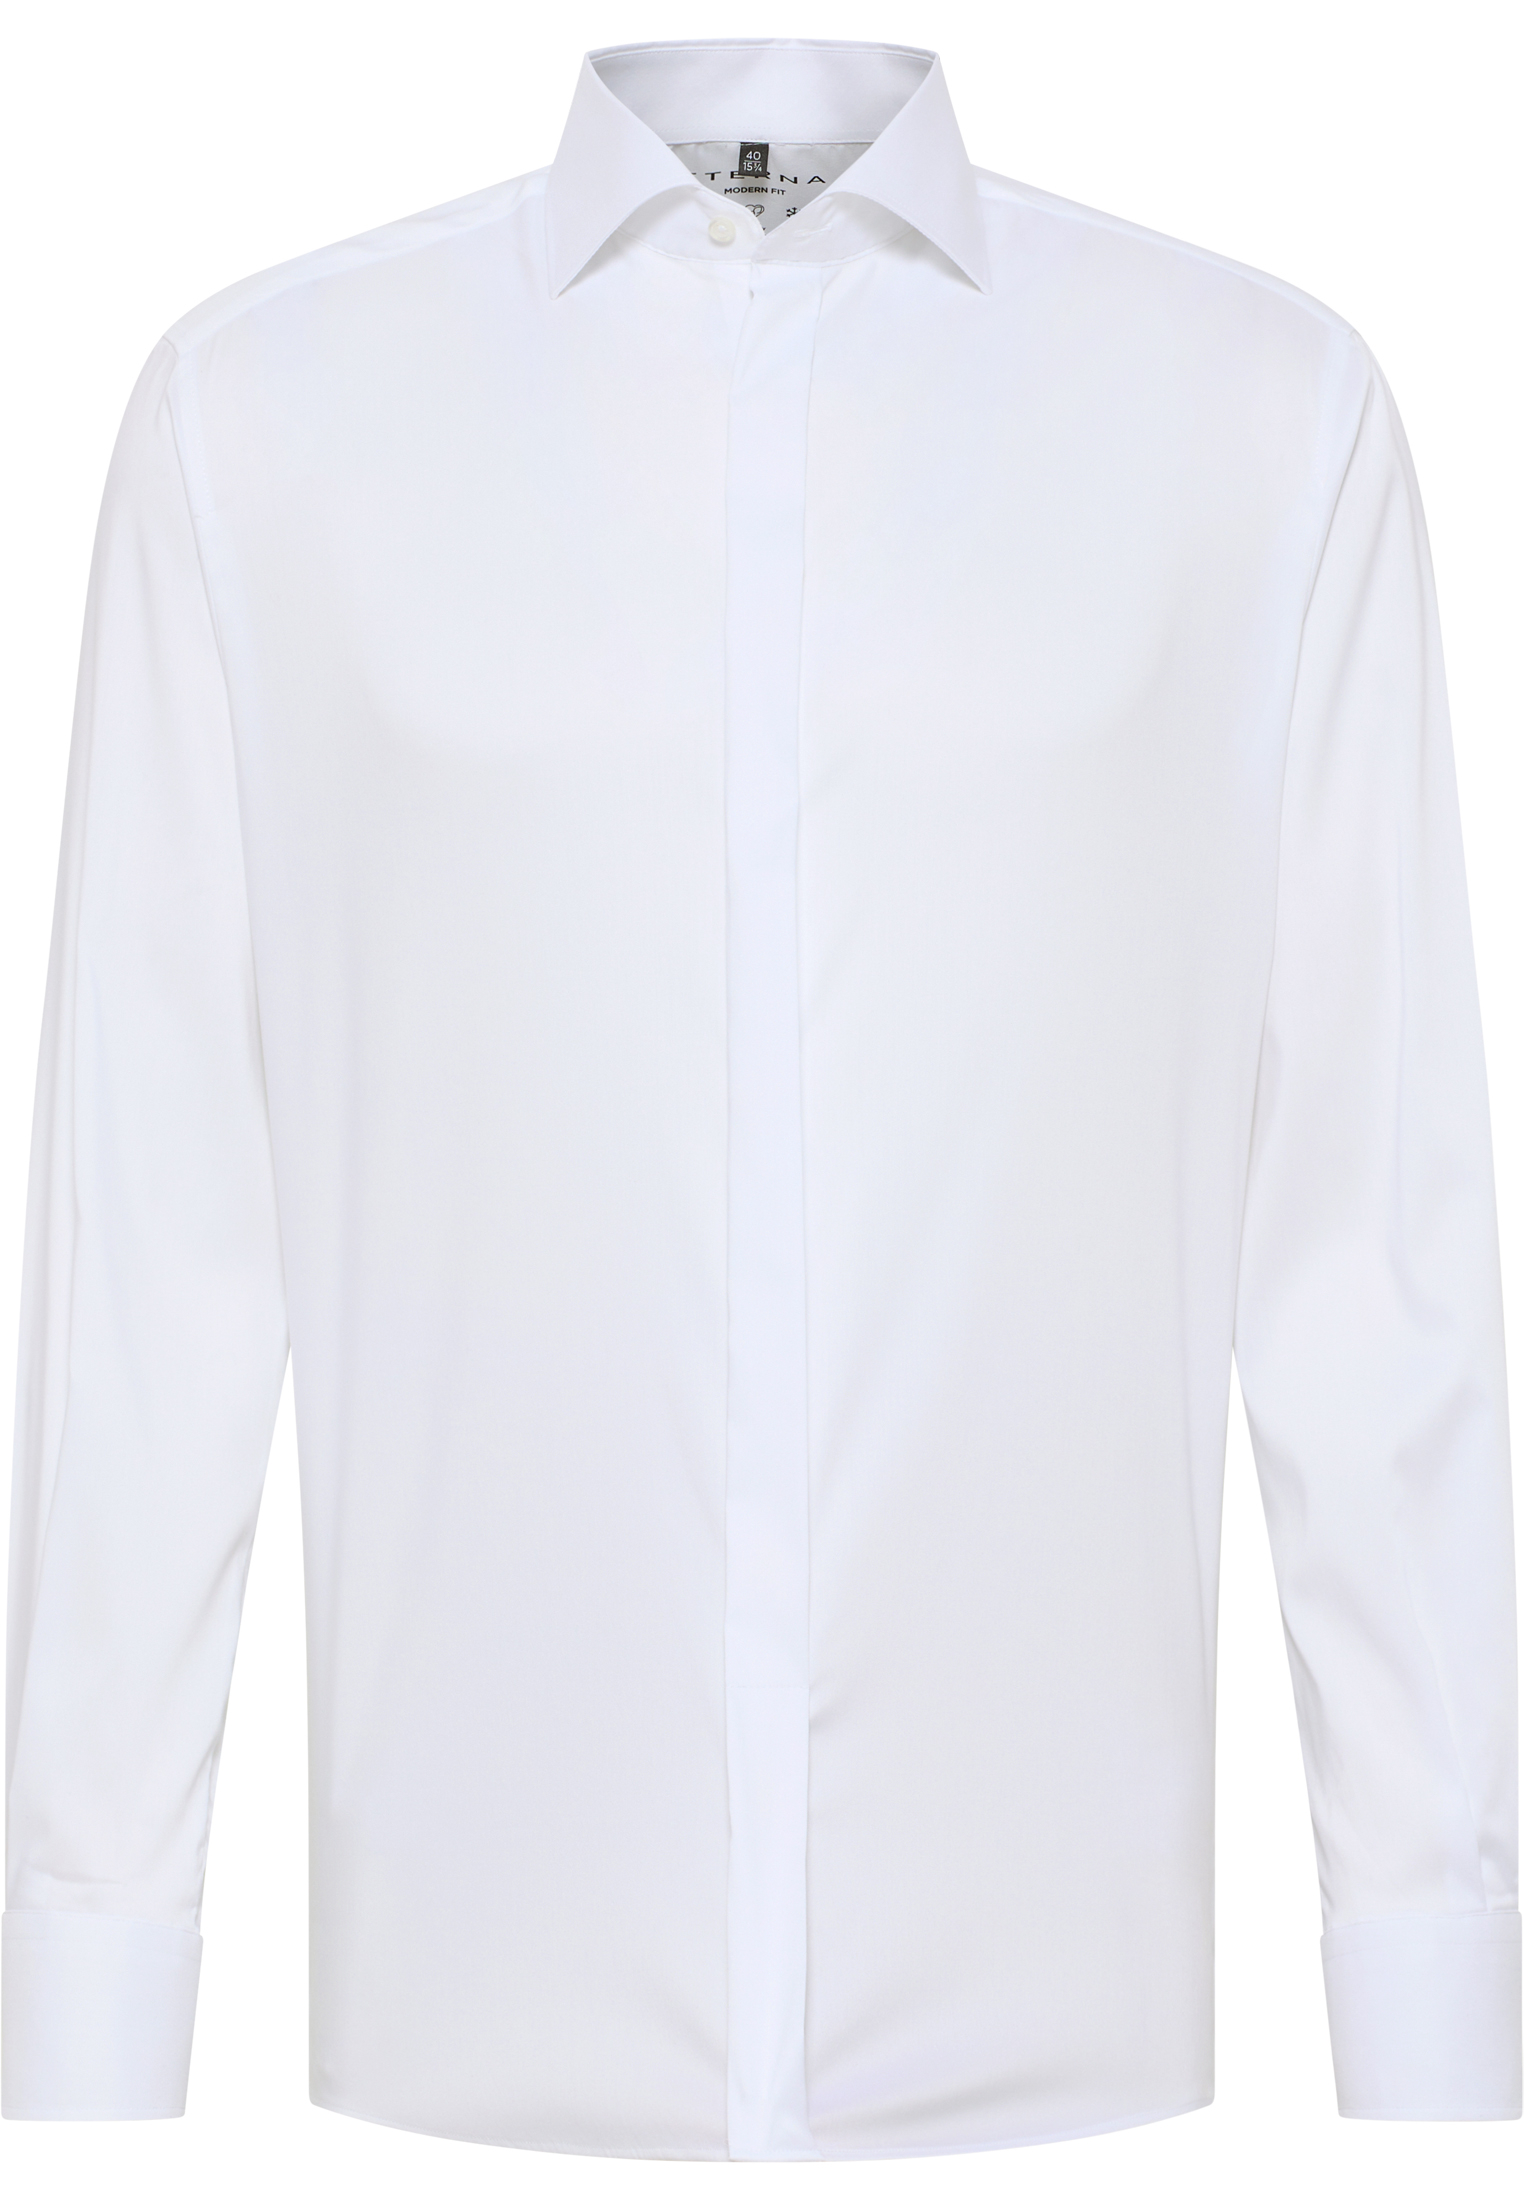 MODERN FIT Performance Shirt in weiß unifarben | weiß | 40 | Langarm |  1SH11237-00-01-40-1/1